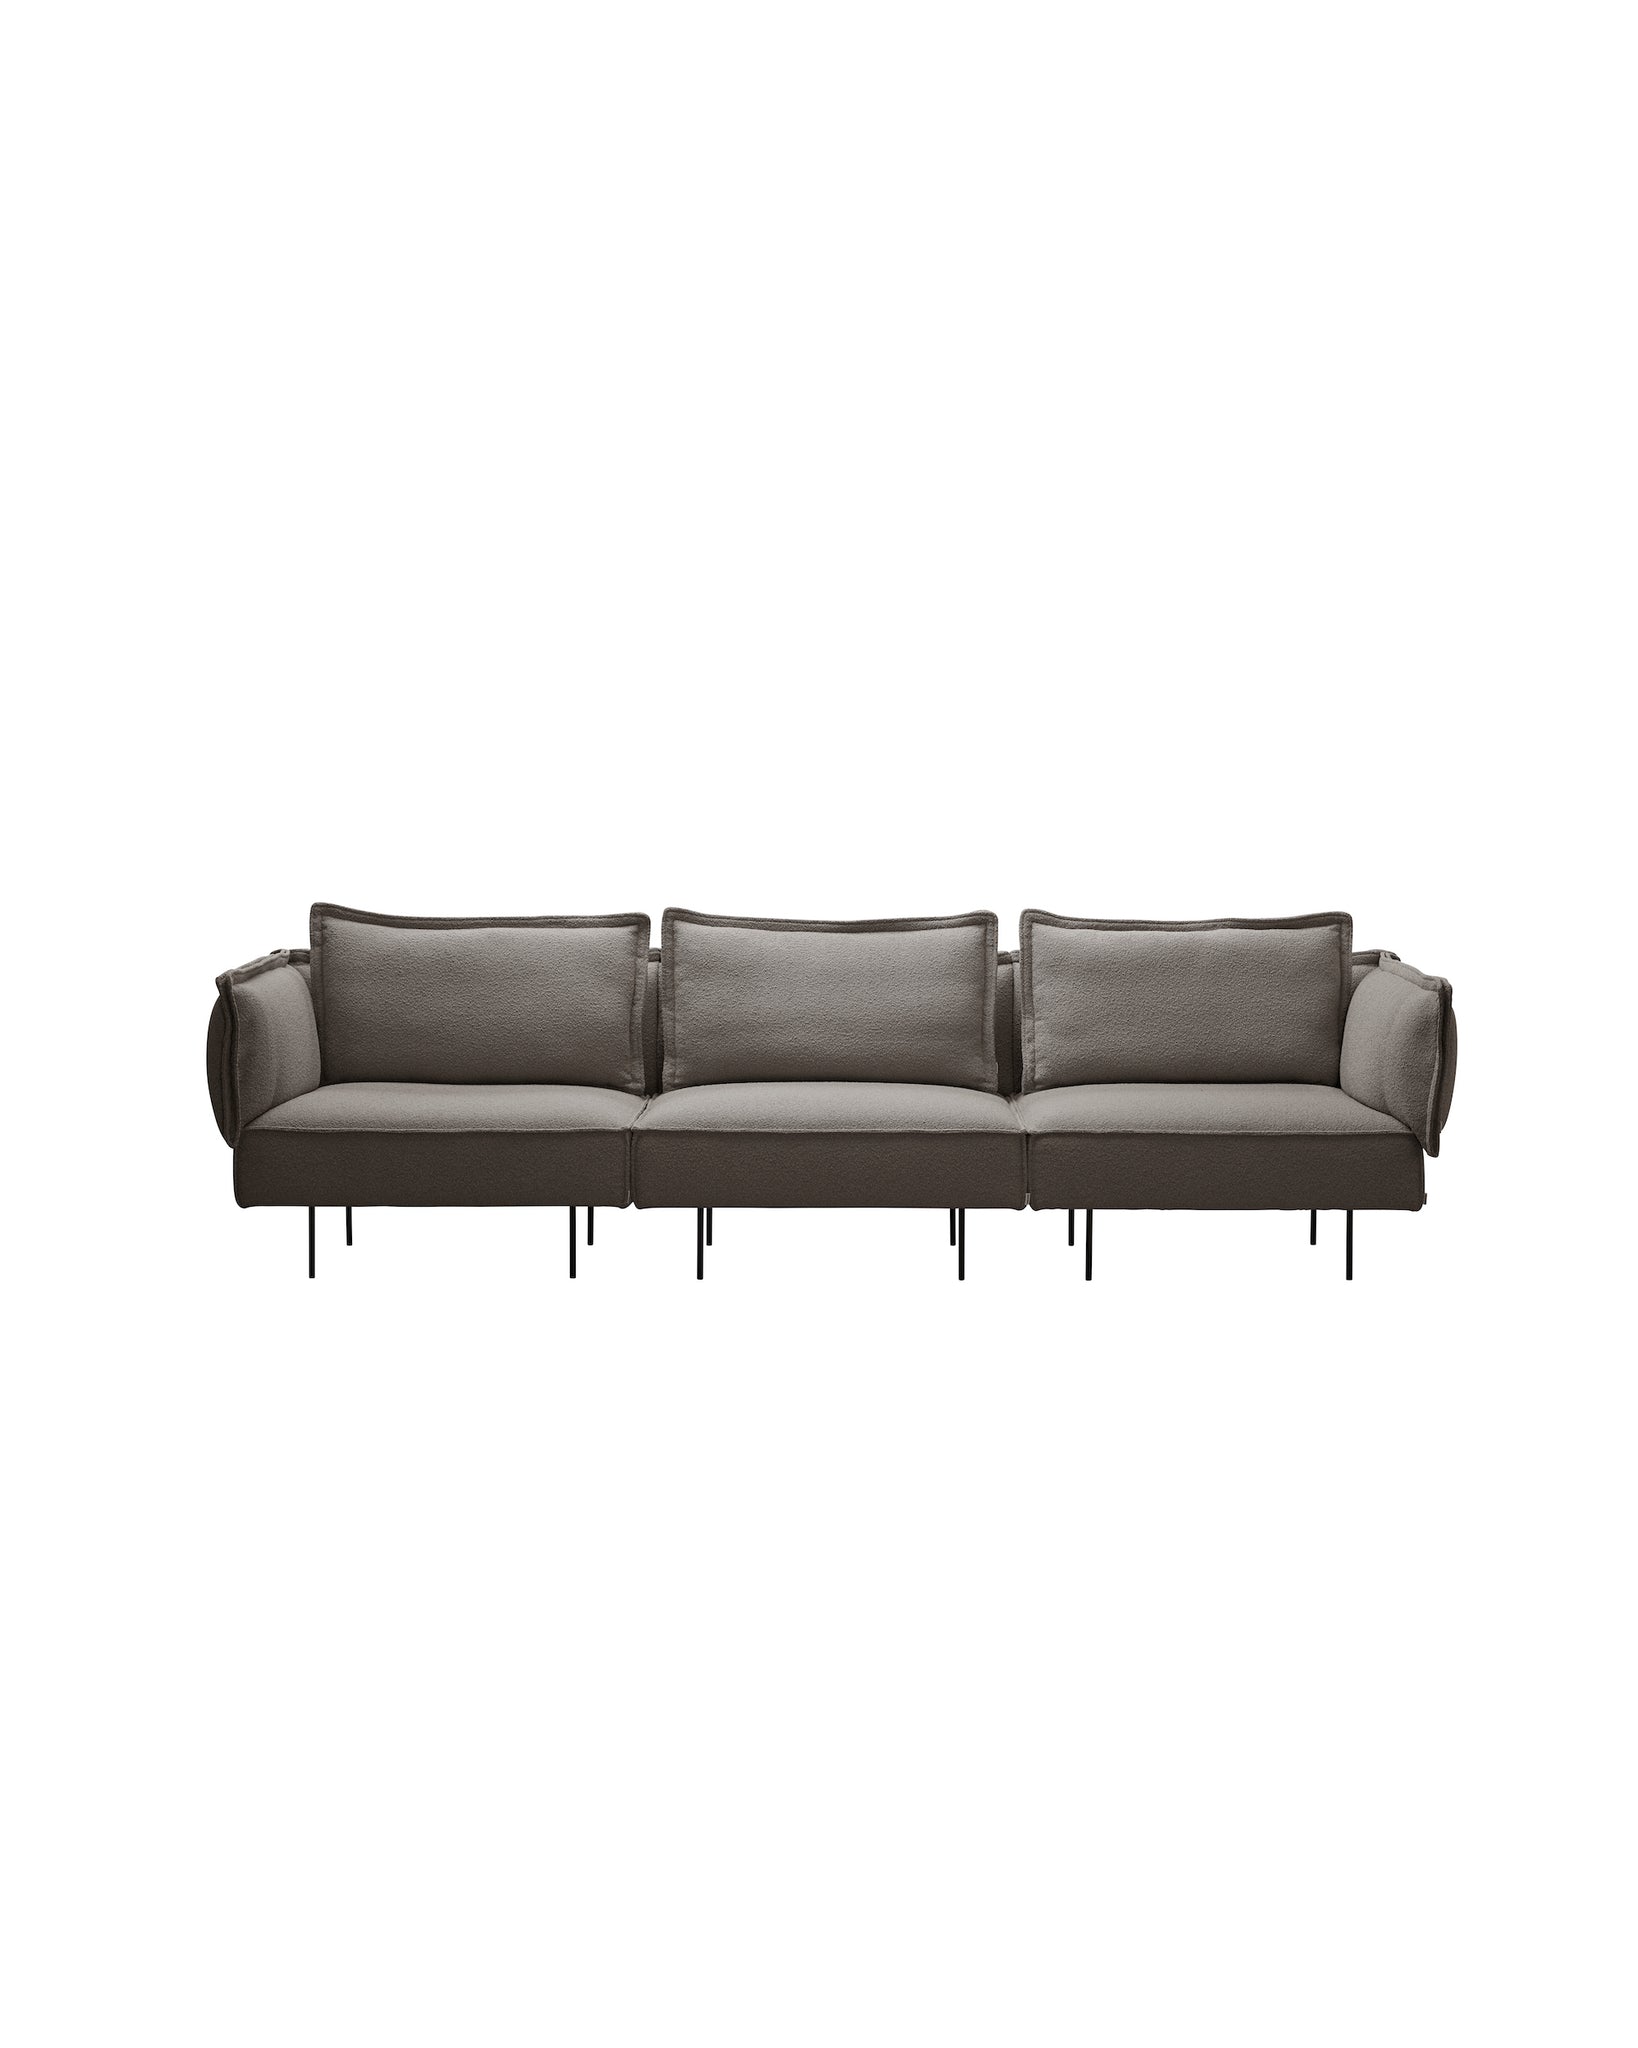 The Modular Sofa 300